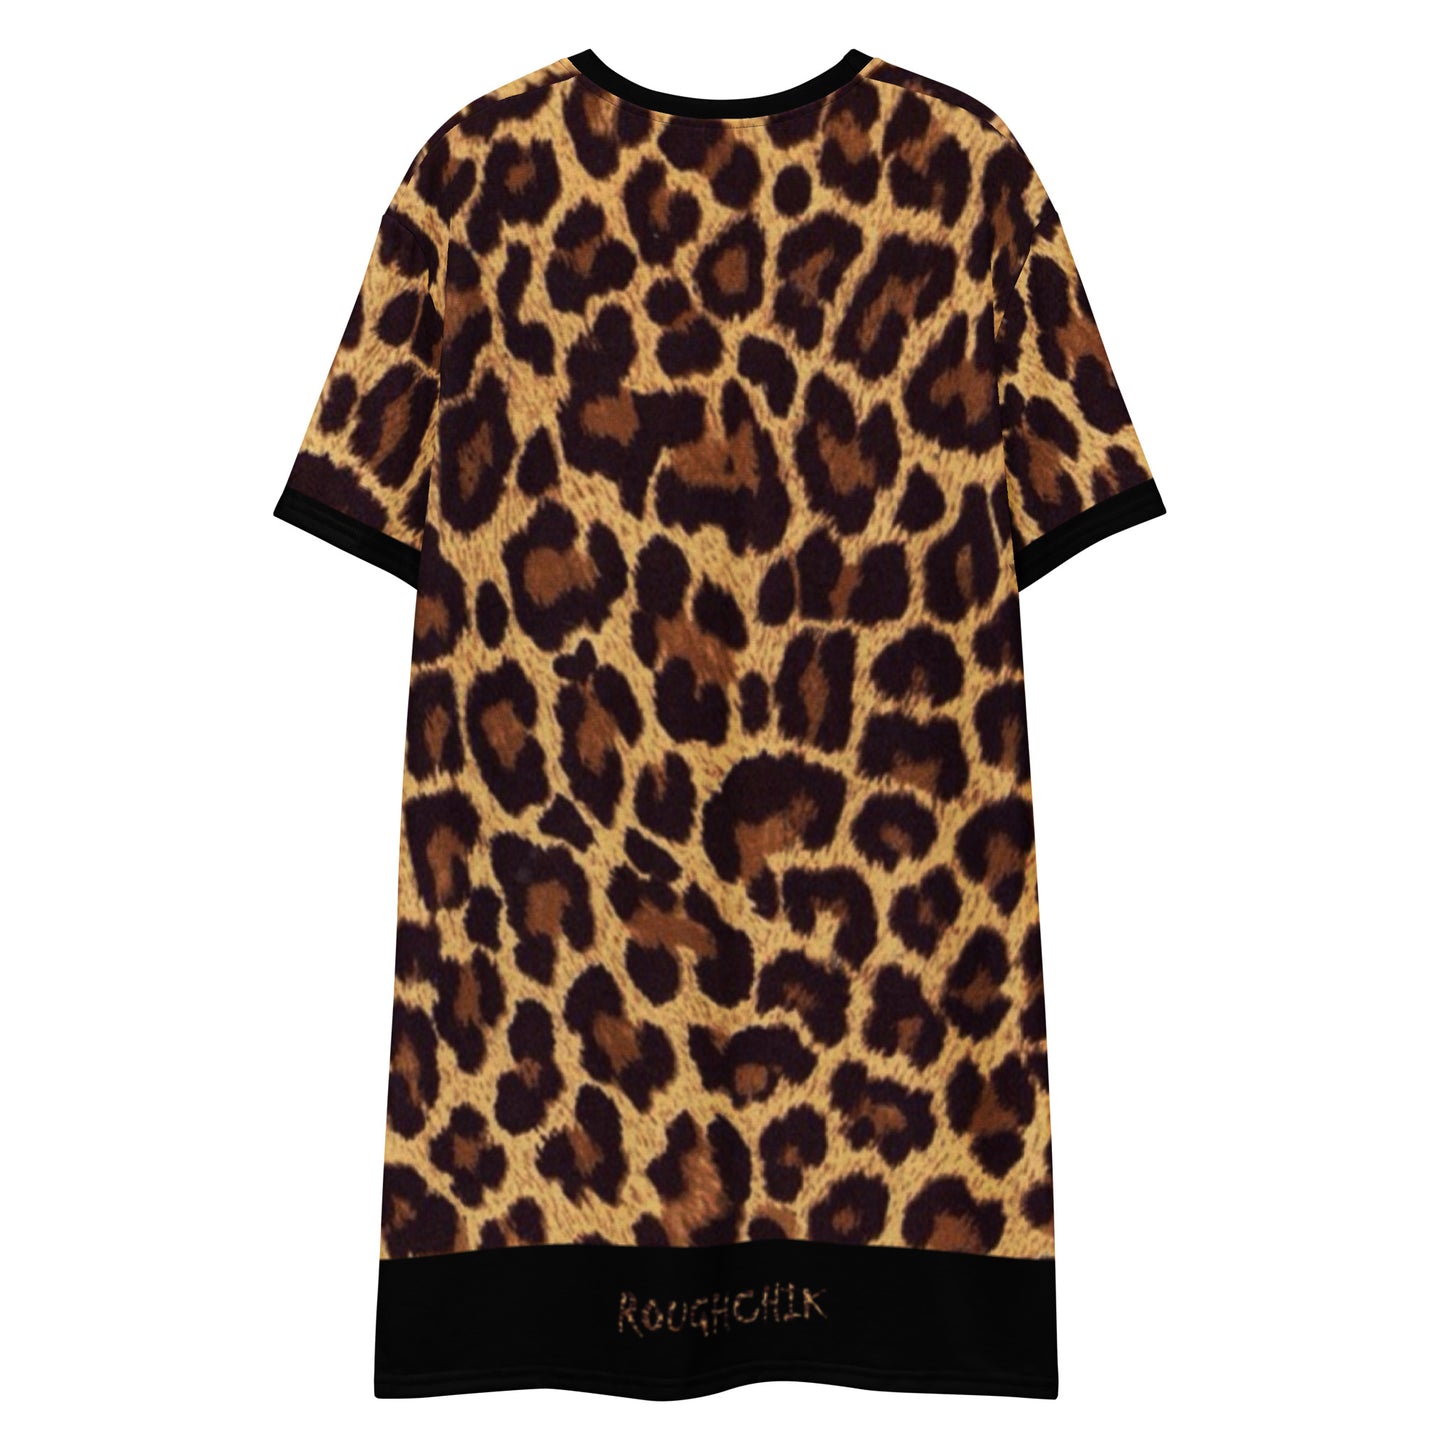 Leopard Print T-shirt dress